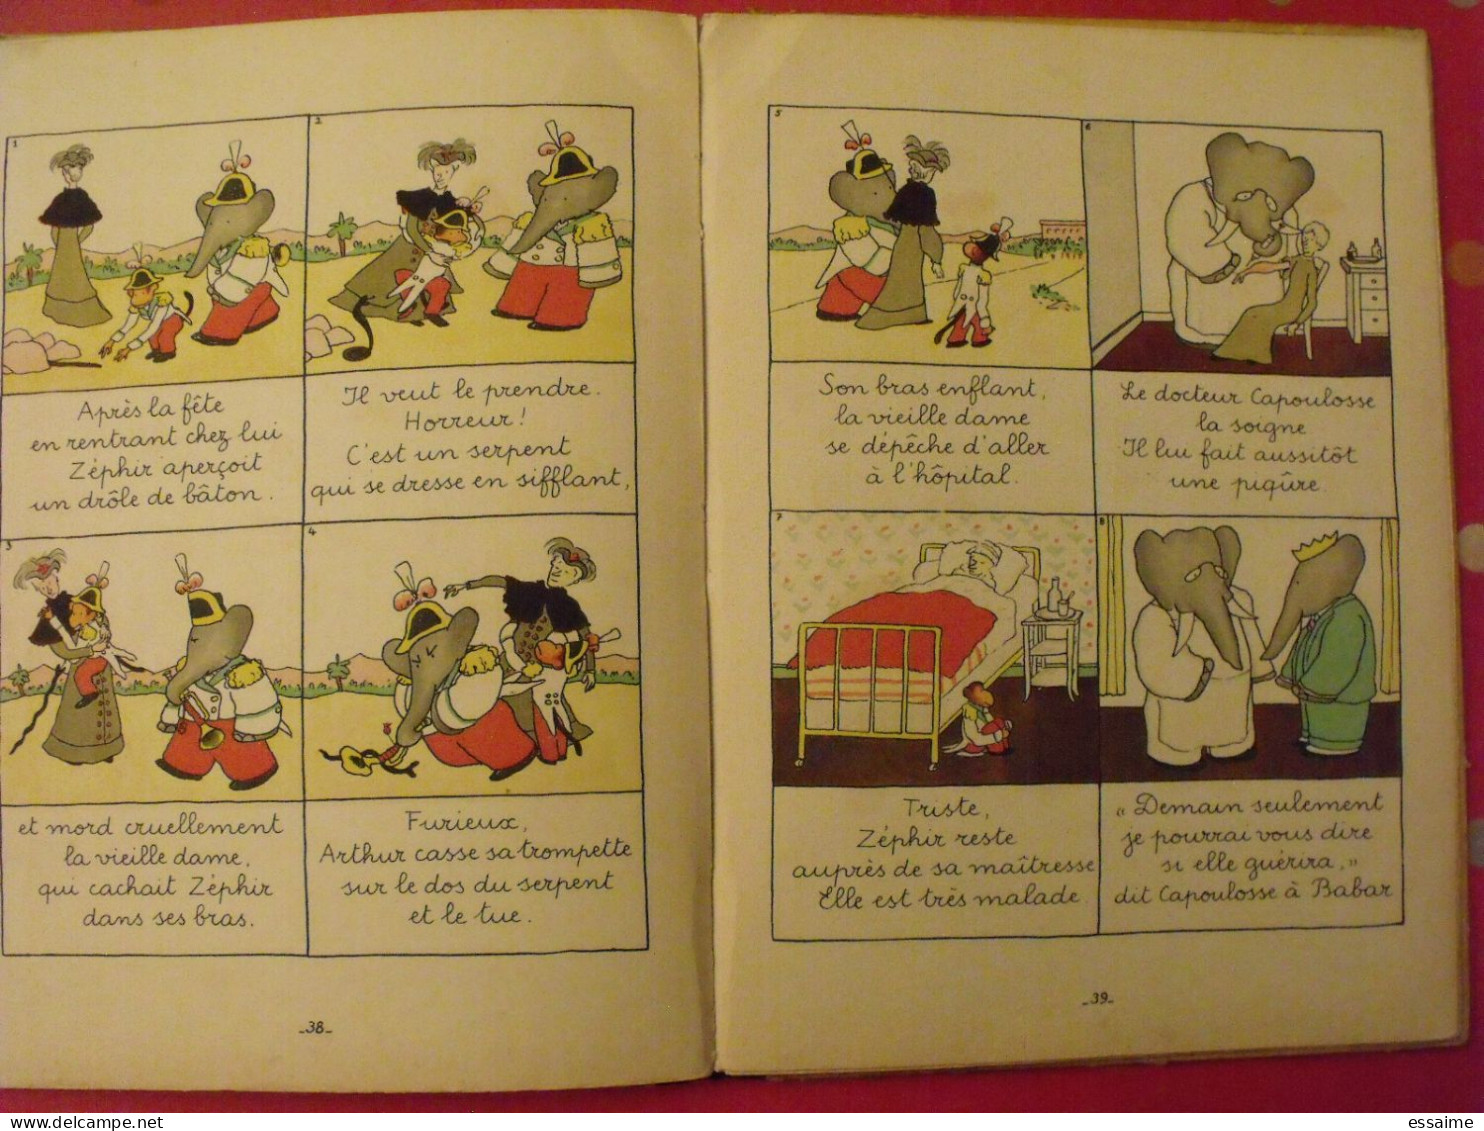 Le roi Babar. Jean de Brunhoff. Albums Babar Hachette 1950. toilé bleu